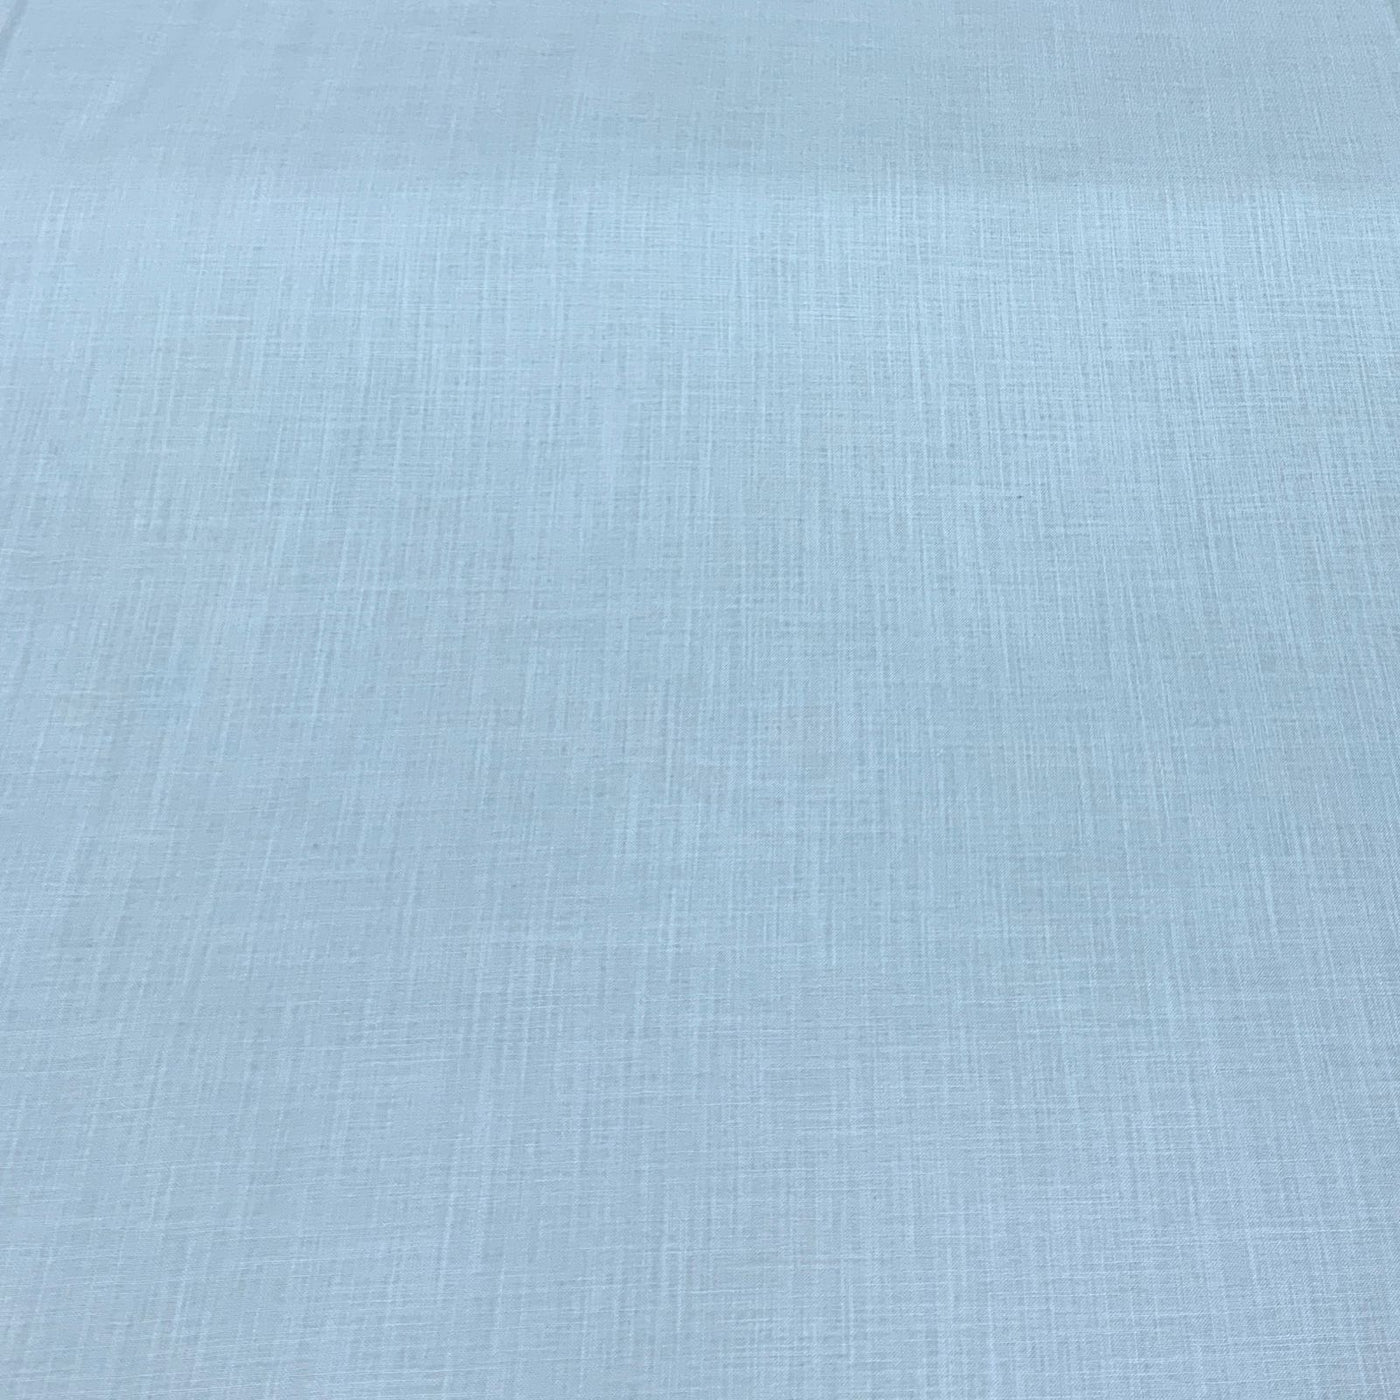 Bluish Grey Plain Cotton Matka Fabric